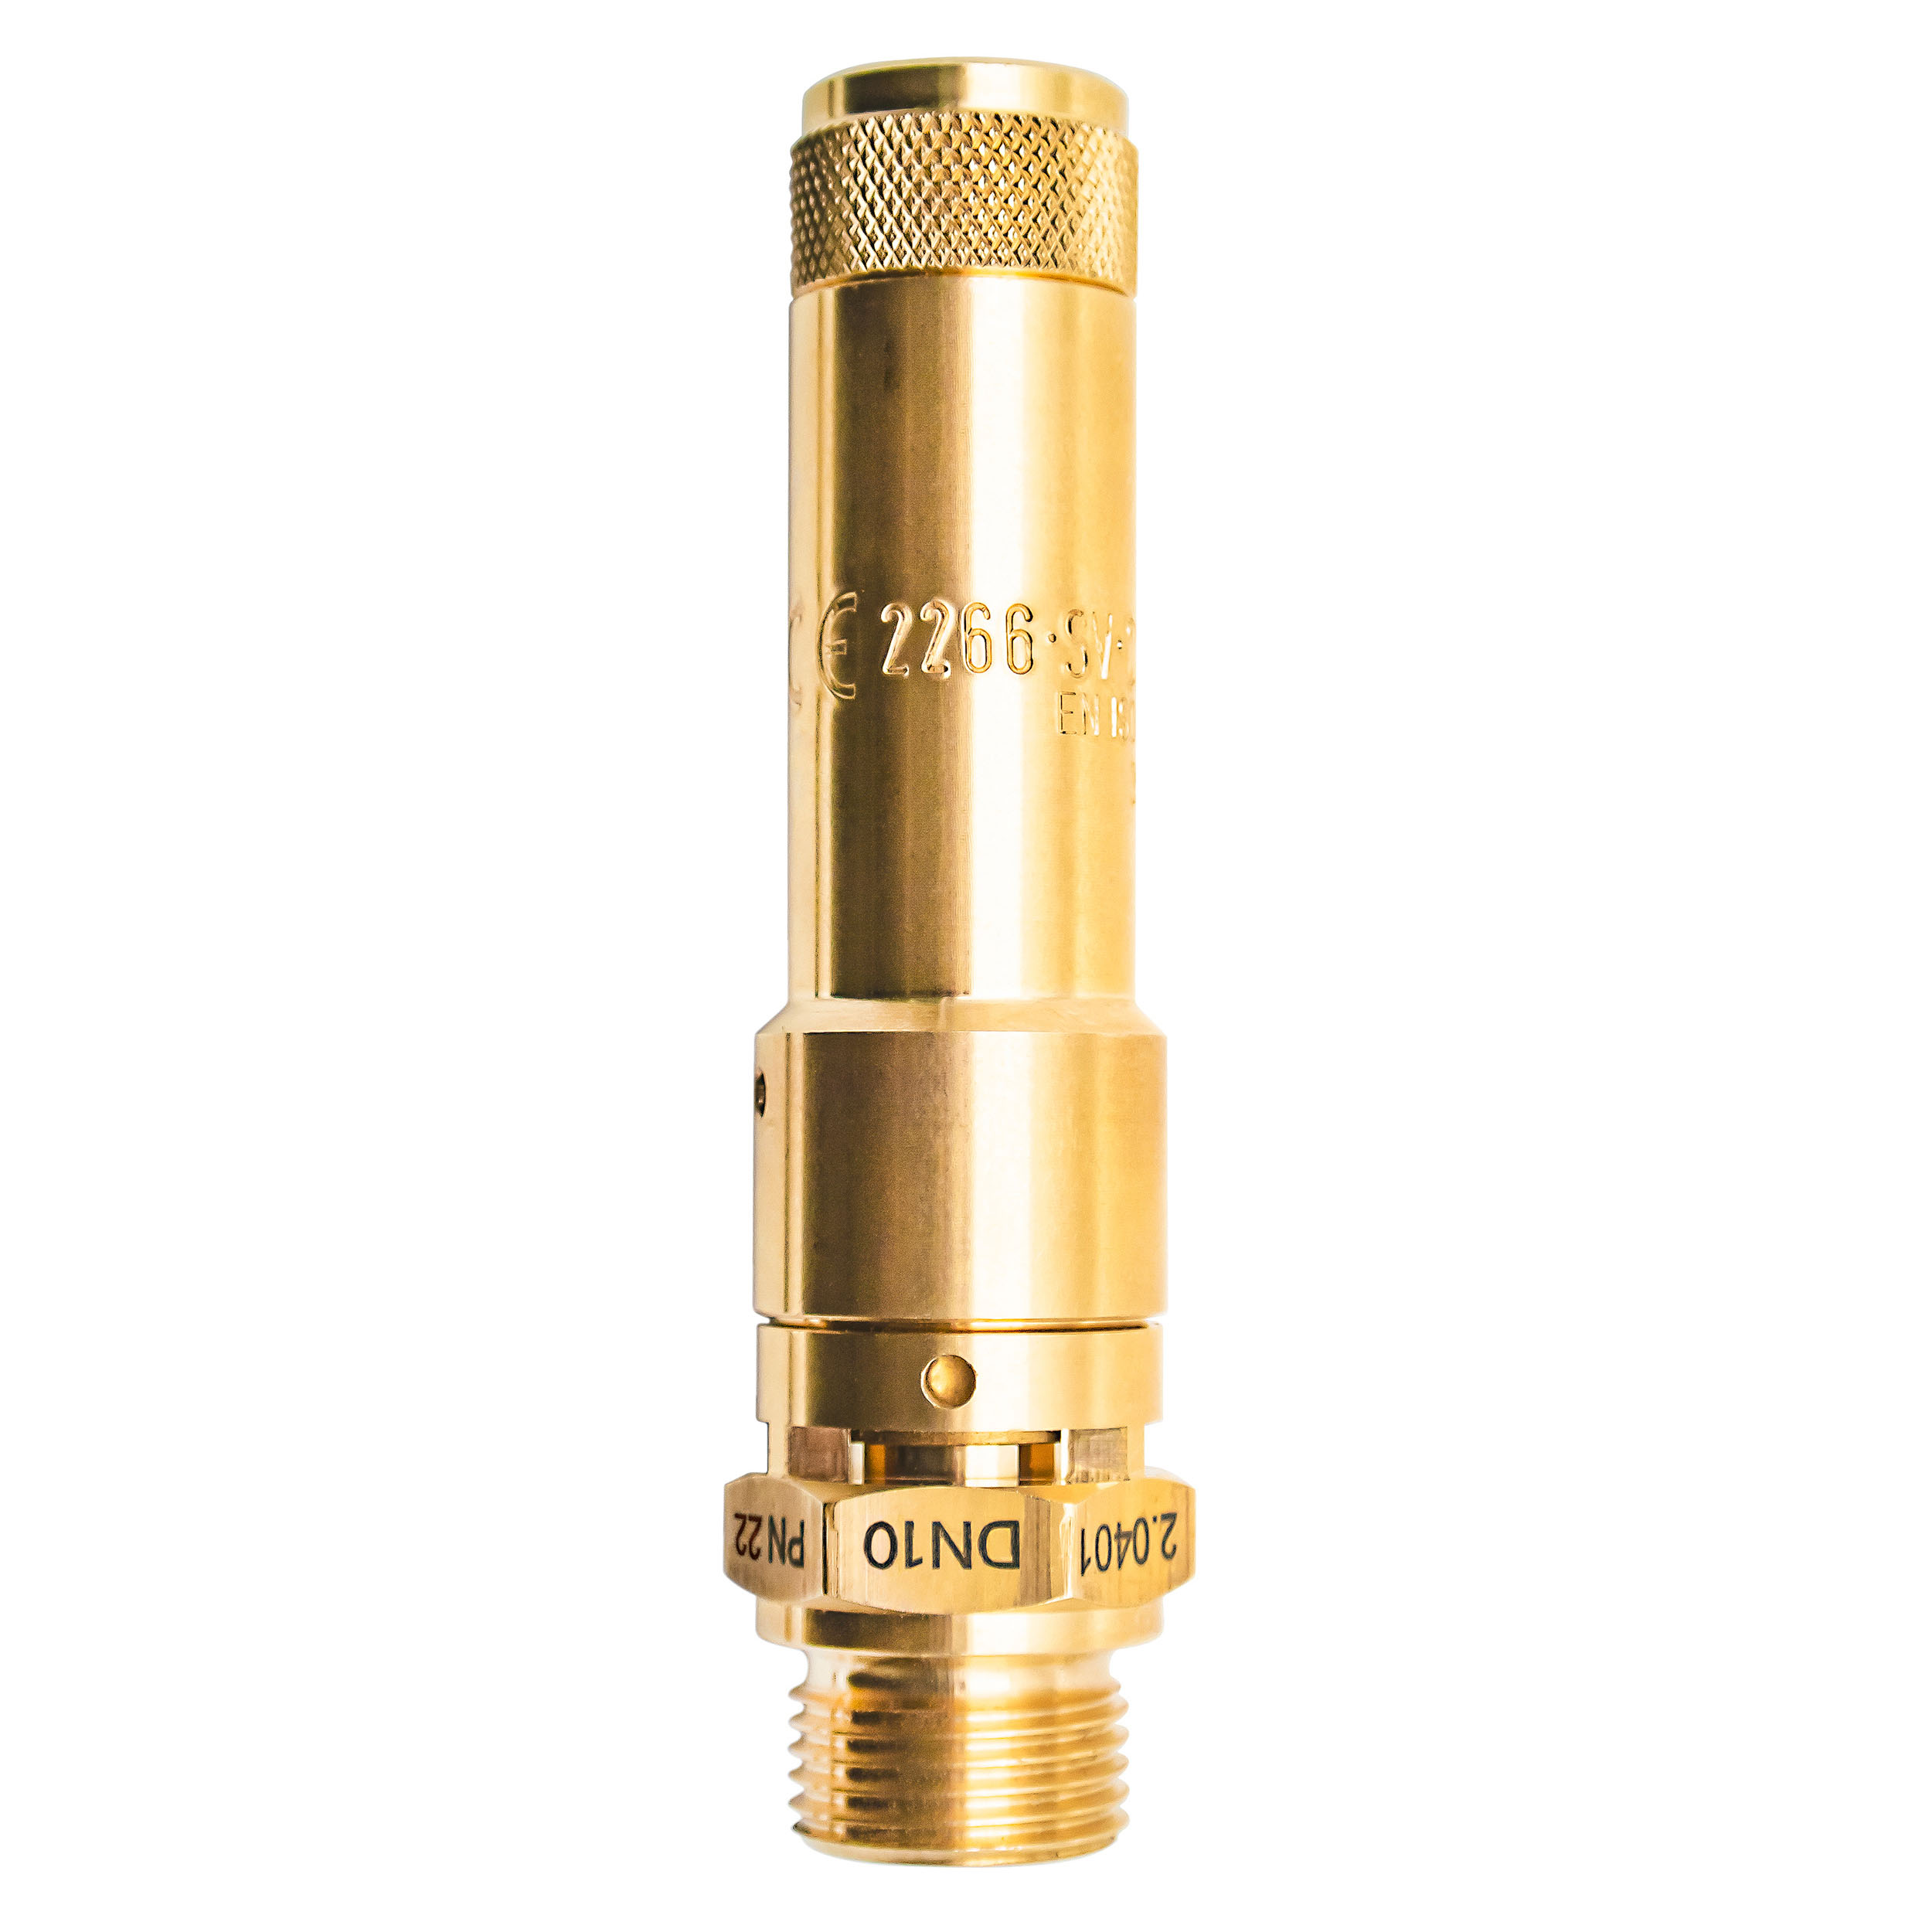 Component-tested safety valve DN 10, G¾, pressure: 16.1-22 bar